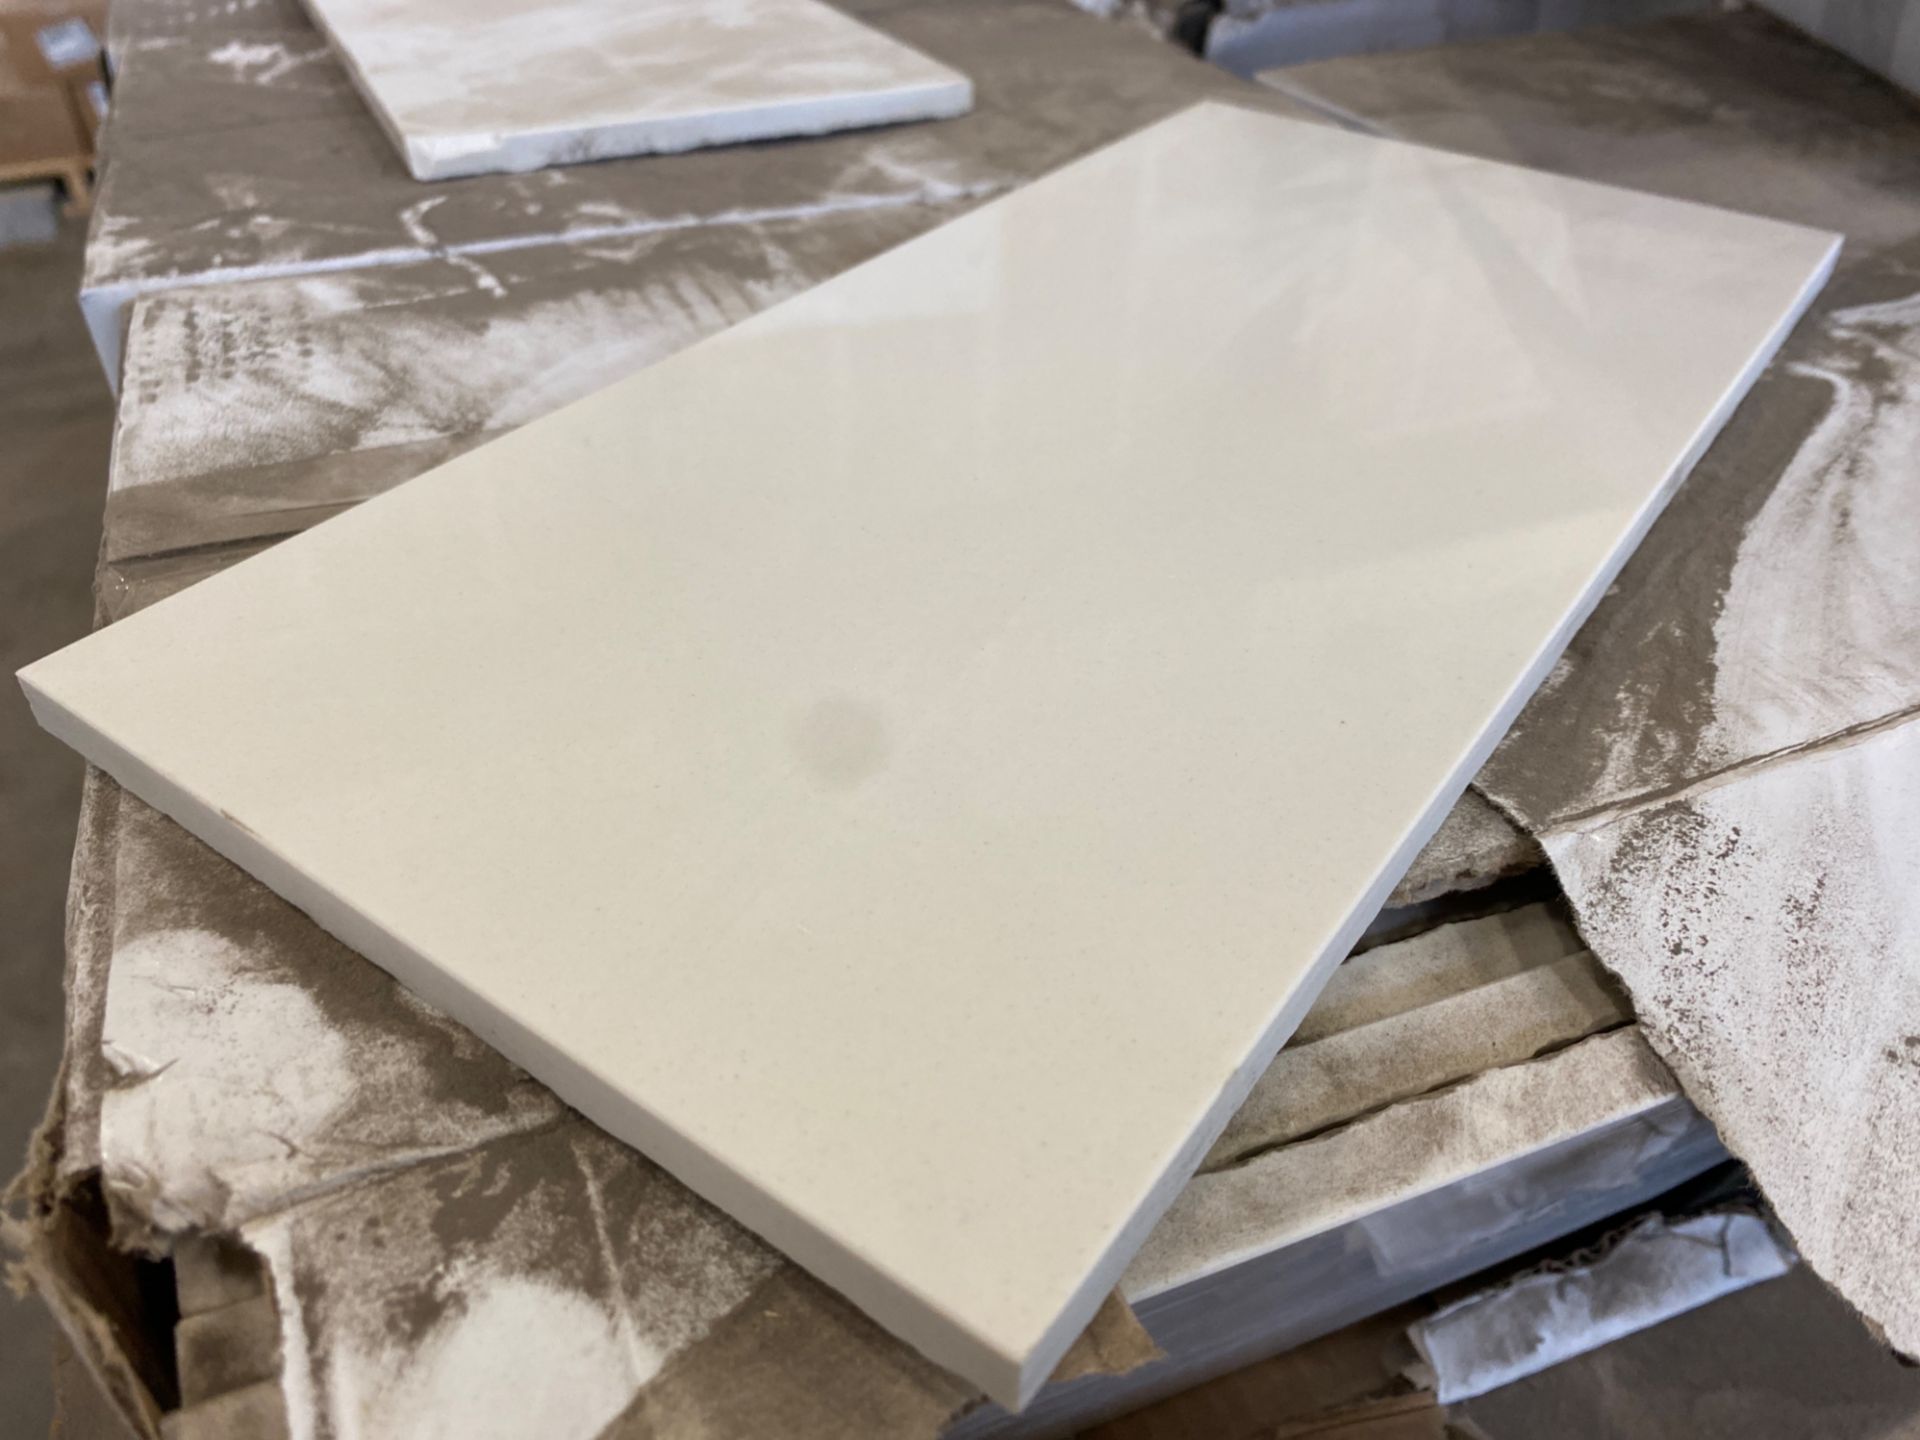 [sq ft] 6" x 12" Polished Tile/Polished White - Image 2 of 2